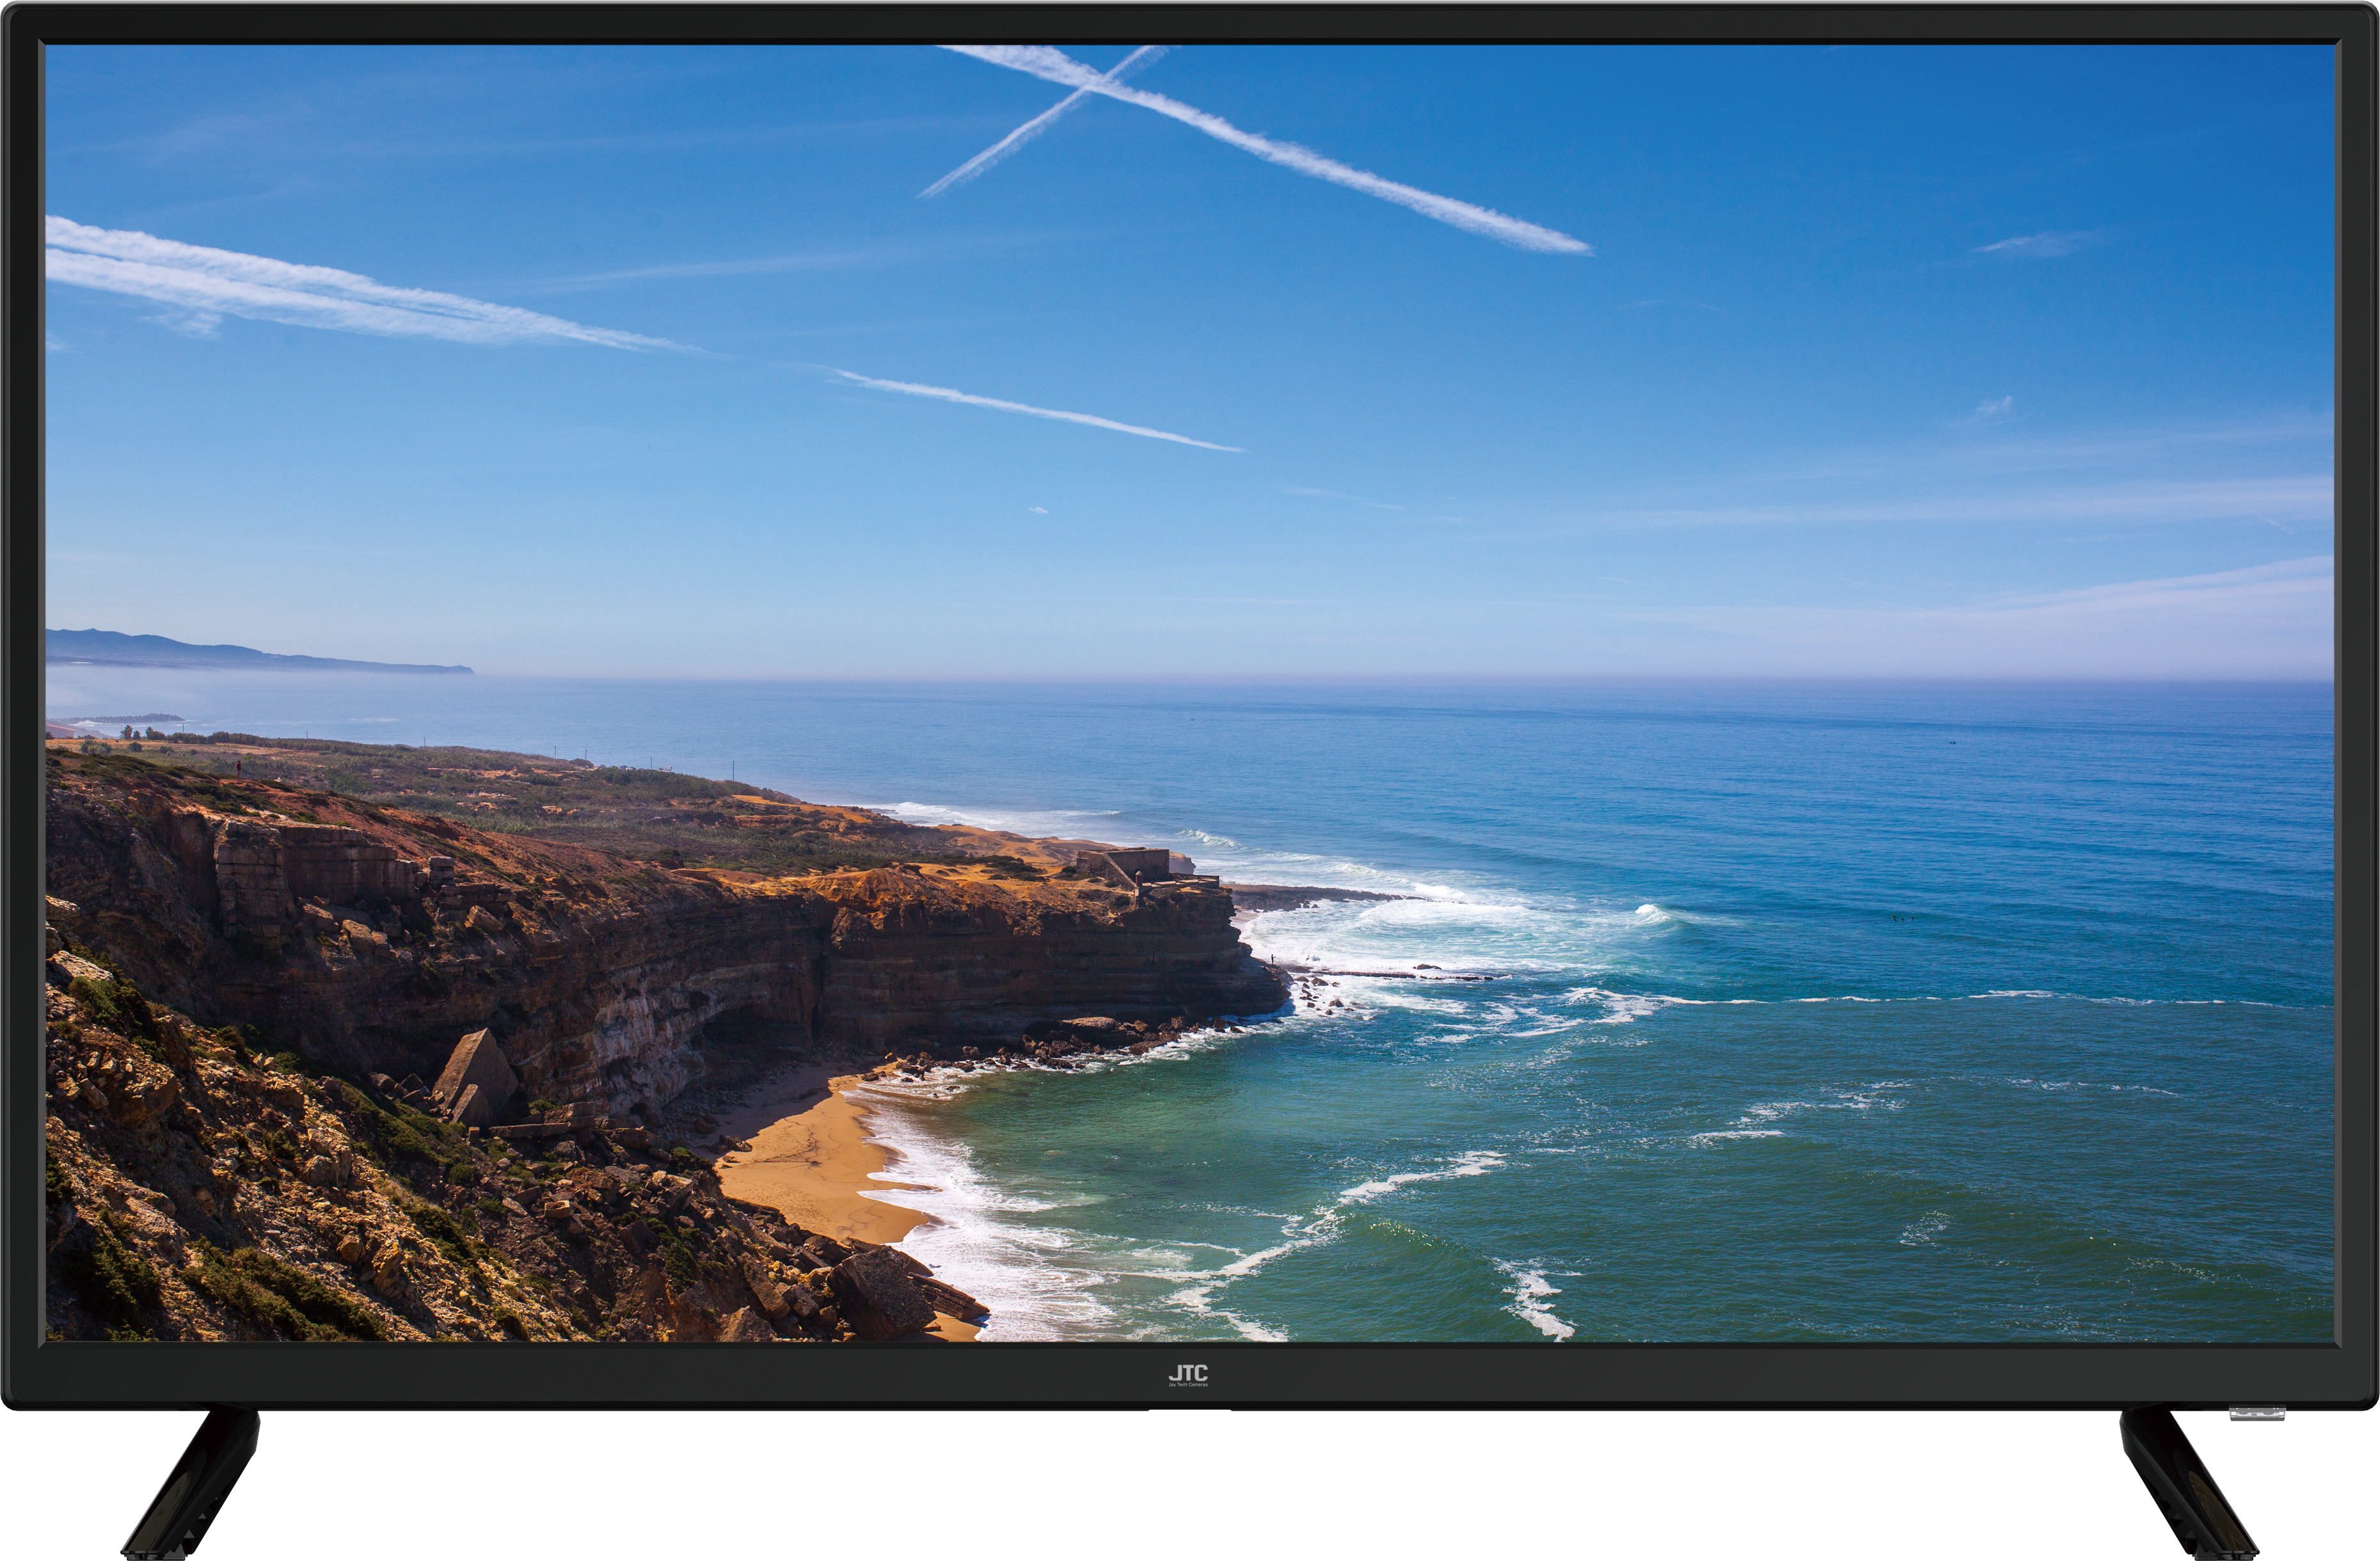 JTC HD Smart TV 80 cm, Zoll Android) 32 LED TV, SMART / OS23250HSA TV HD, (Flat